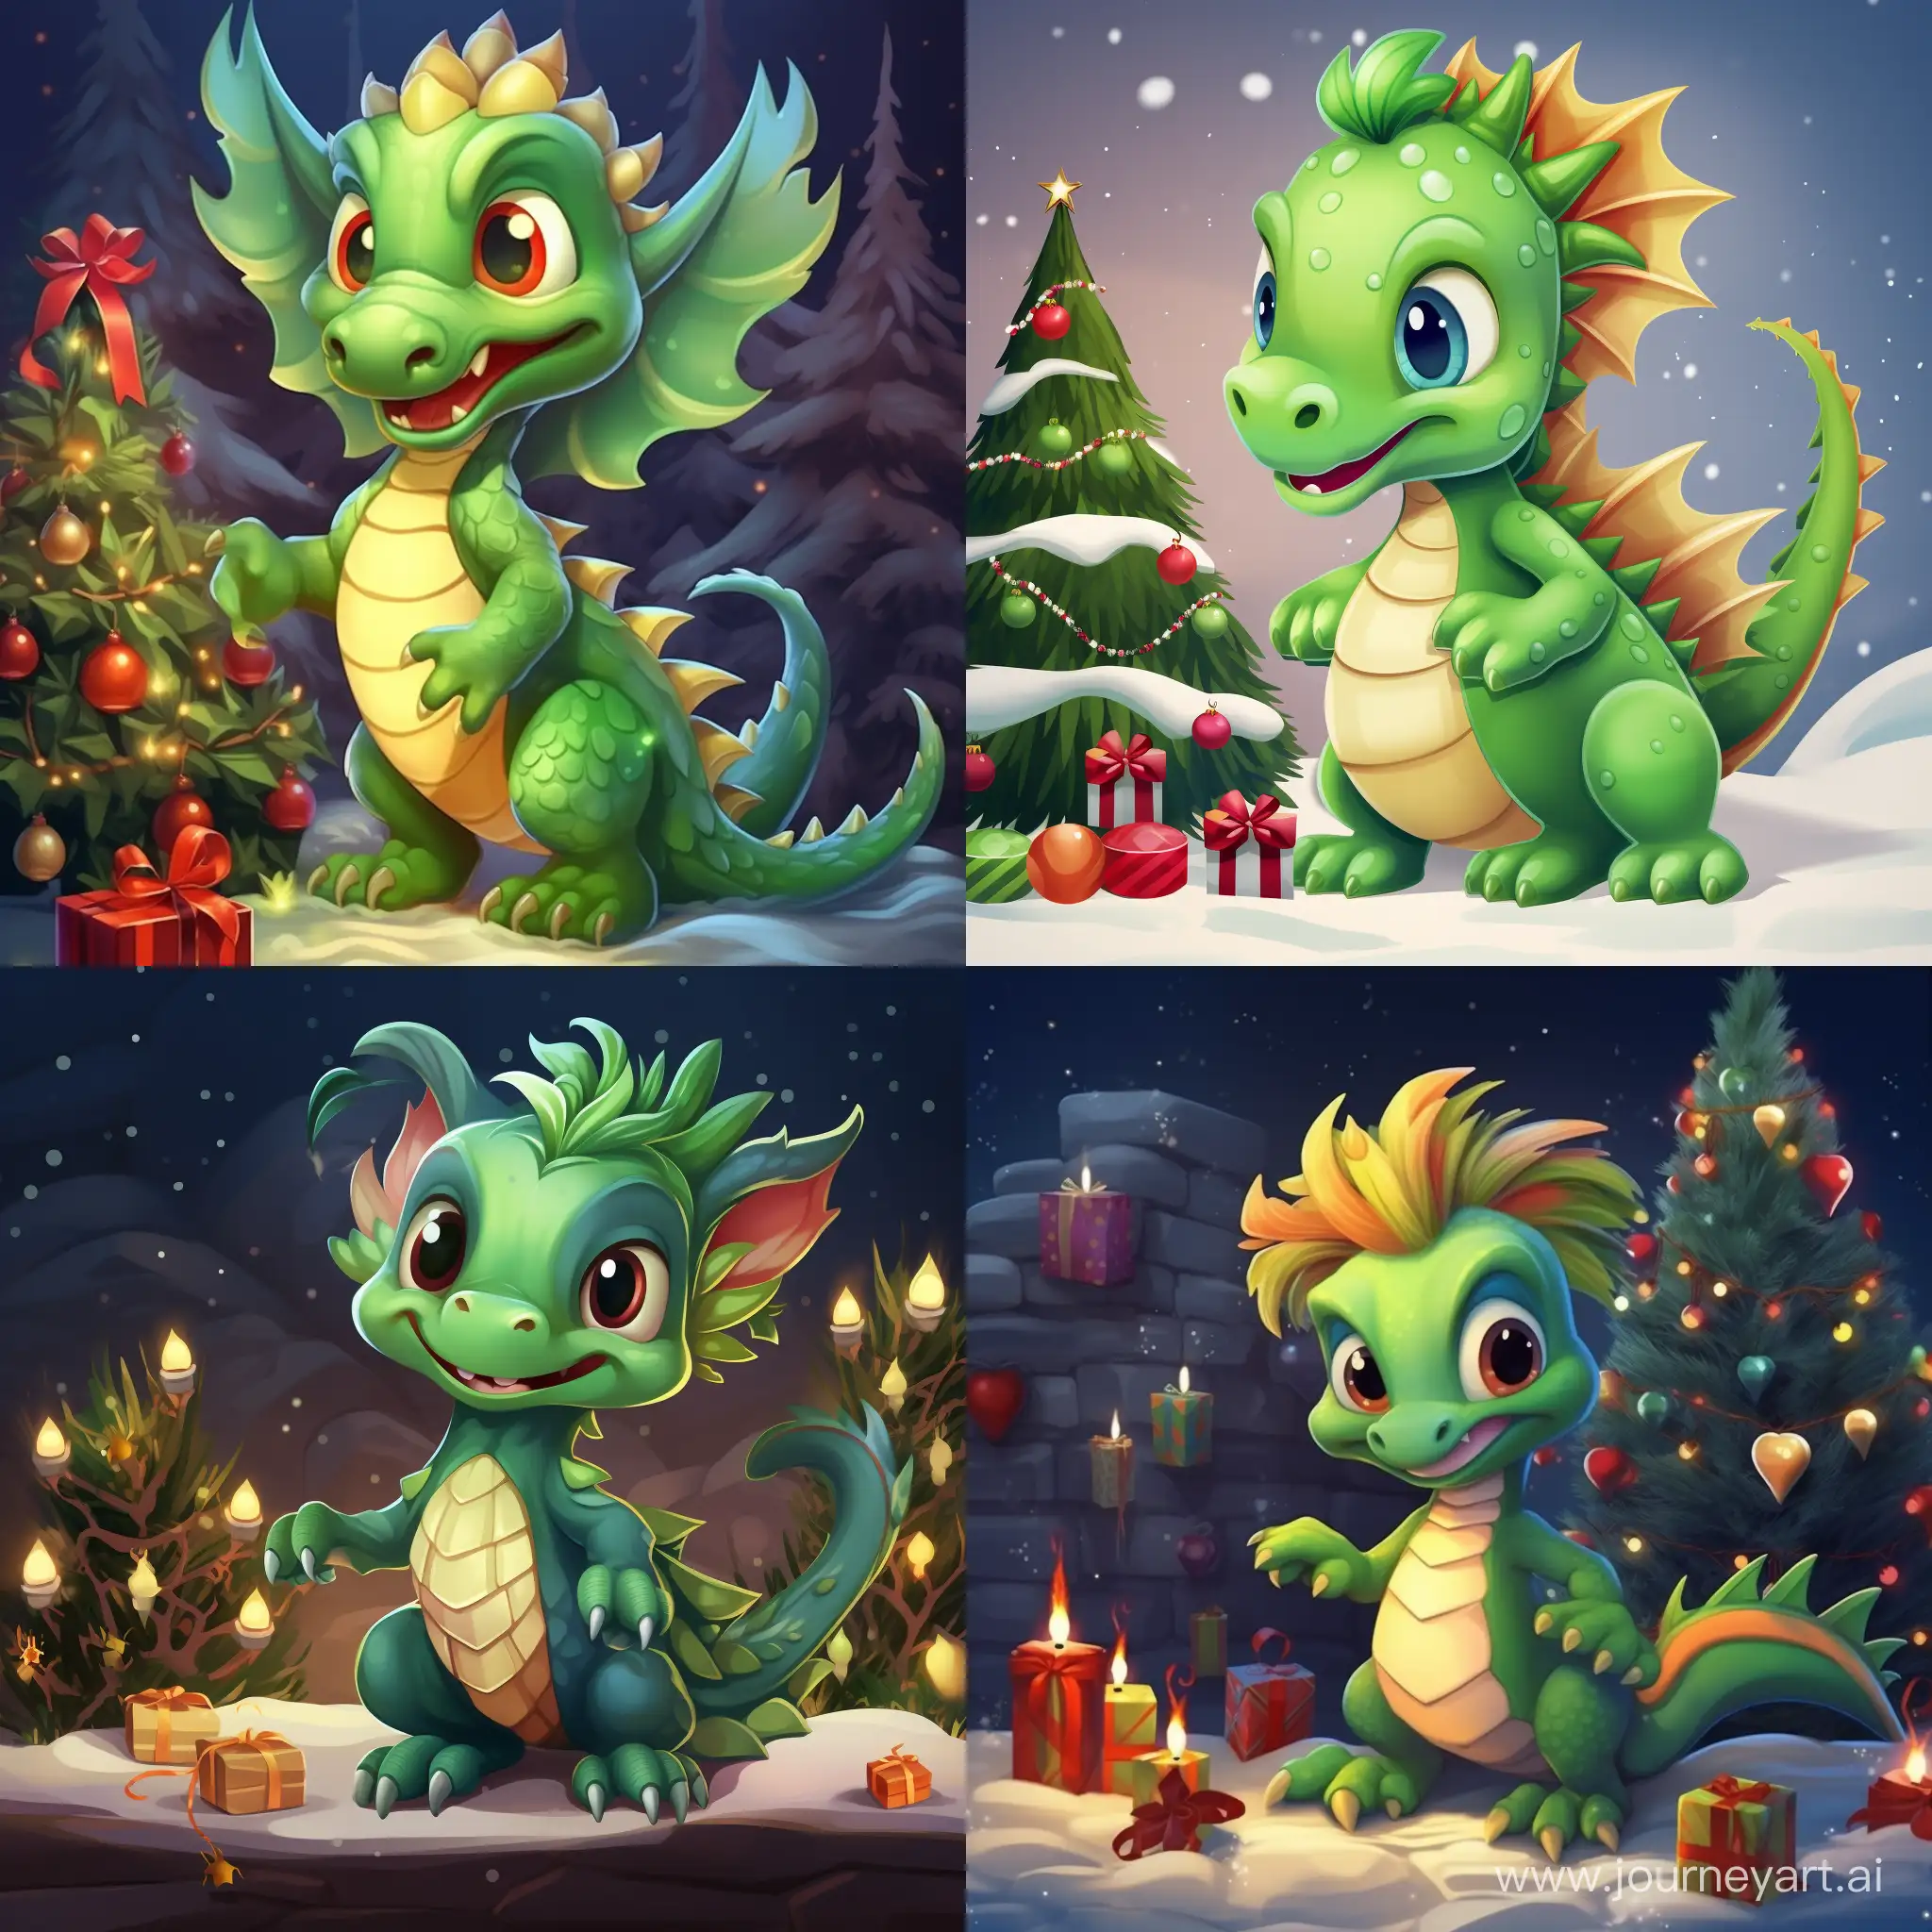 Vibrant-New-Years-Greeting-Cheerful-Cartoon-Green-Dragon-and-Festive-Tree